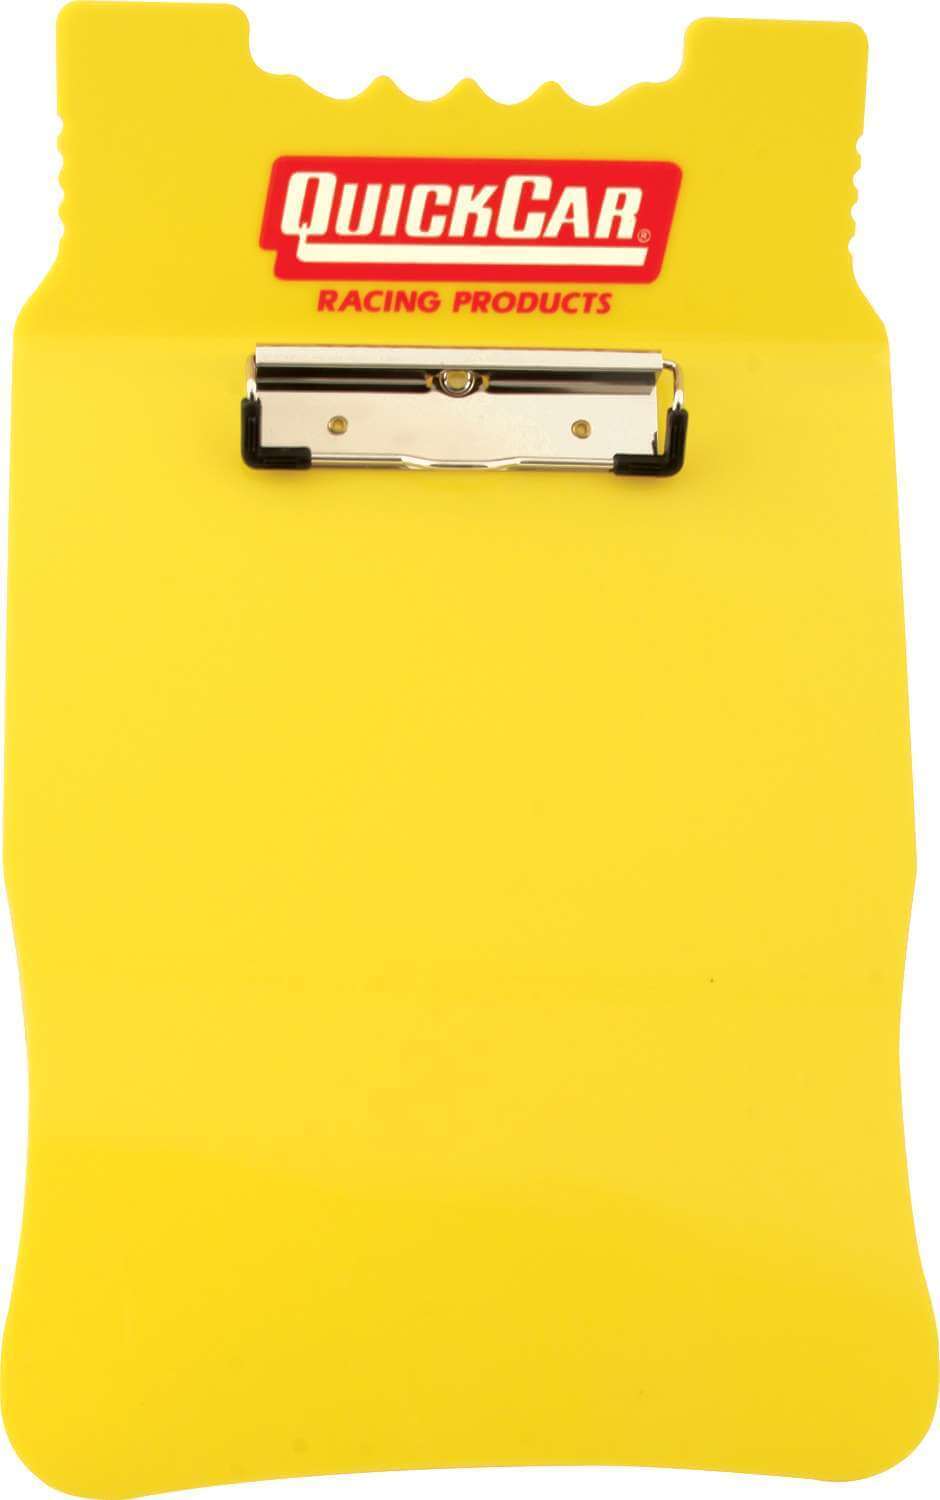 Acrylic Clipboard Yellow - $29.95